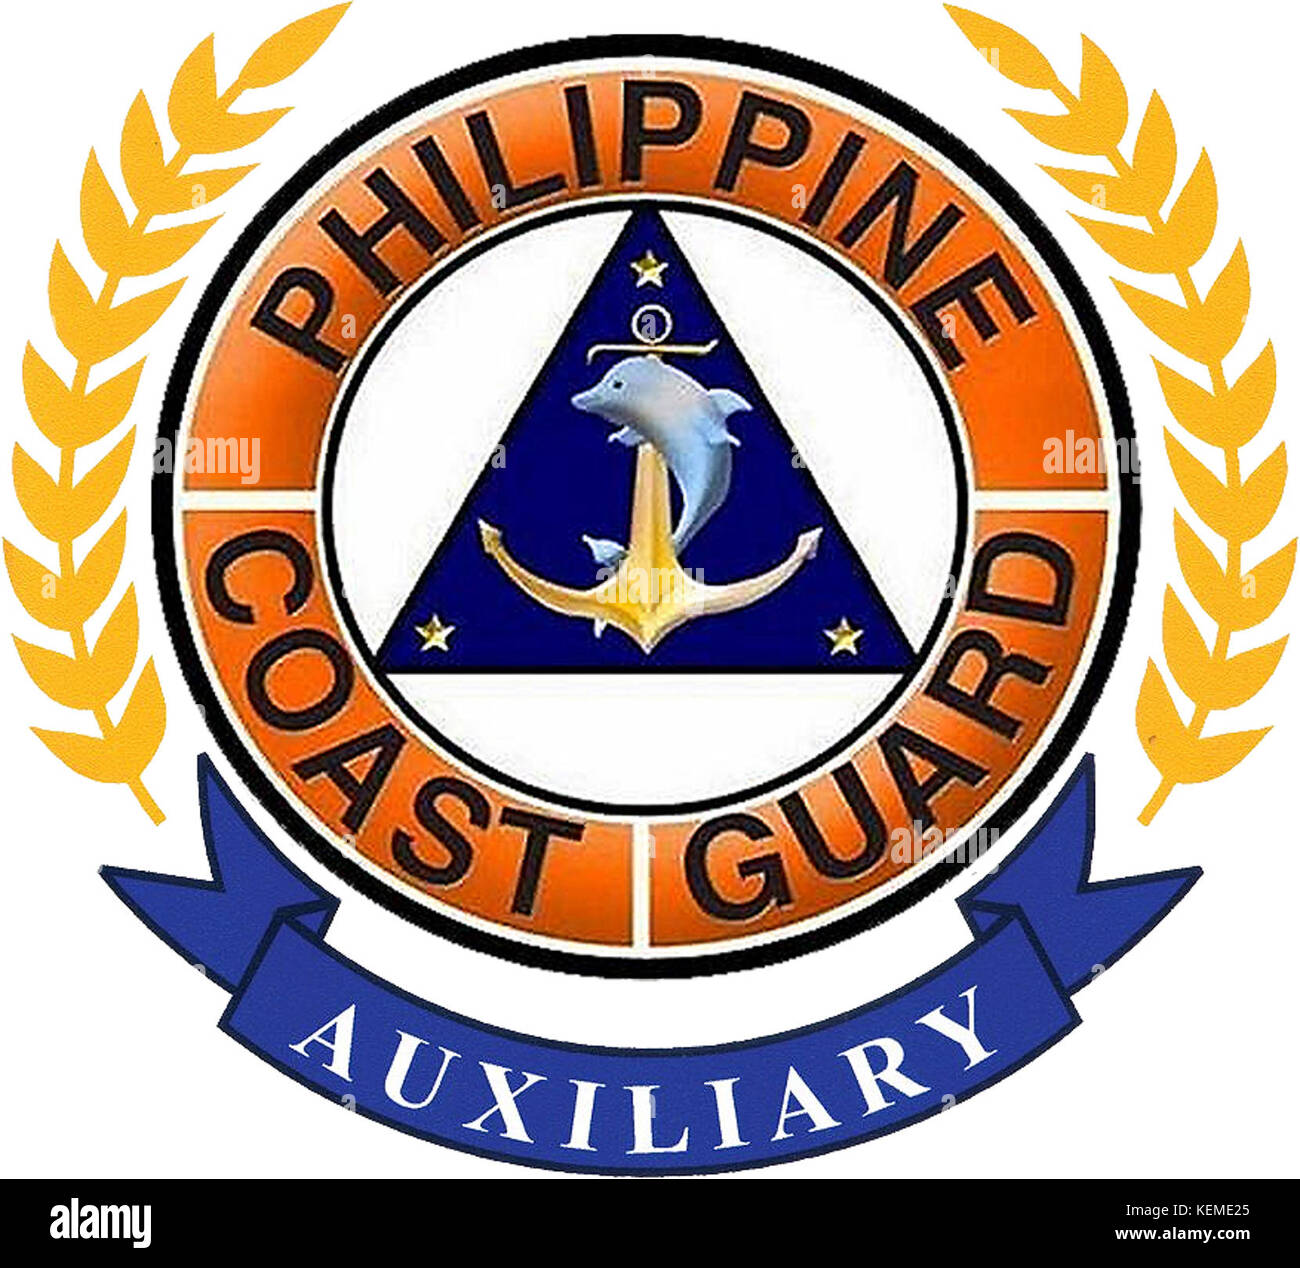 Philippine Coast Guard Auxiliary